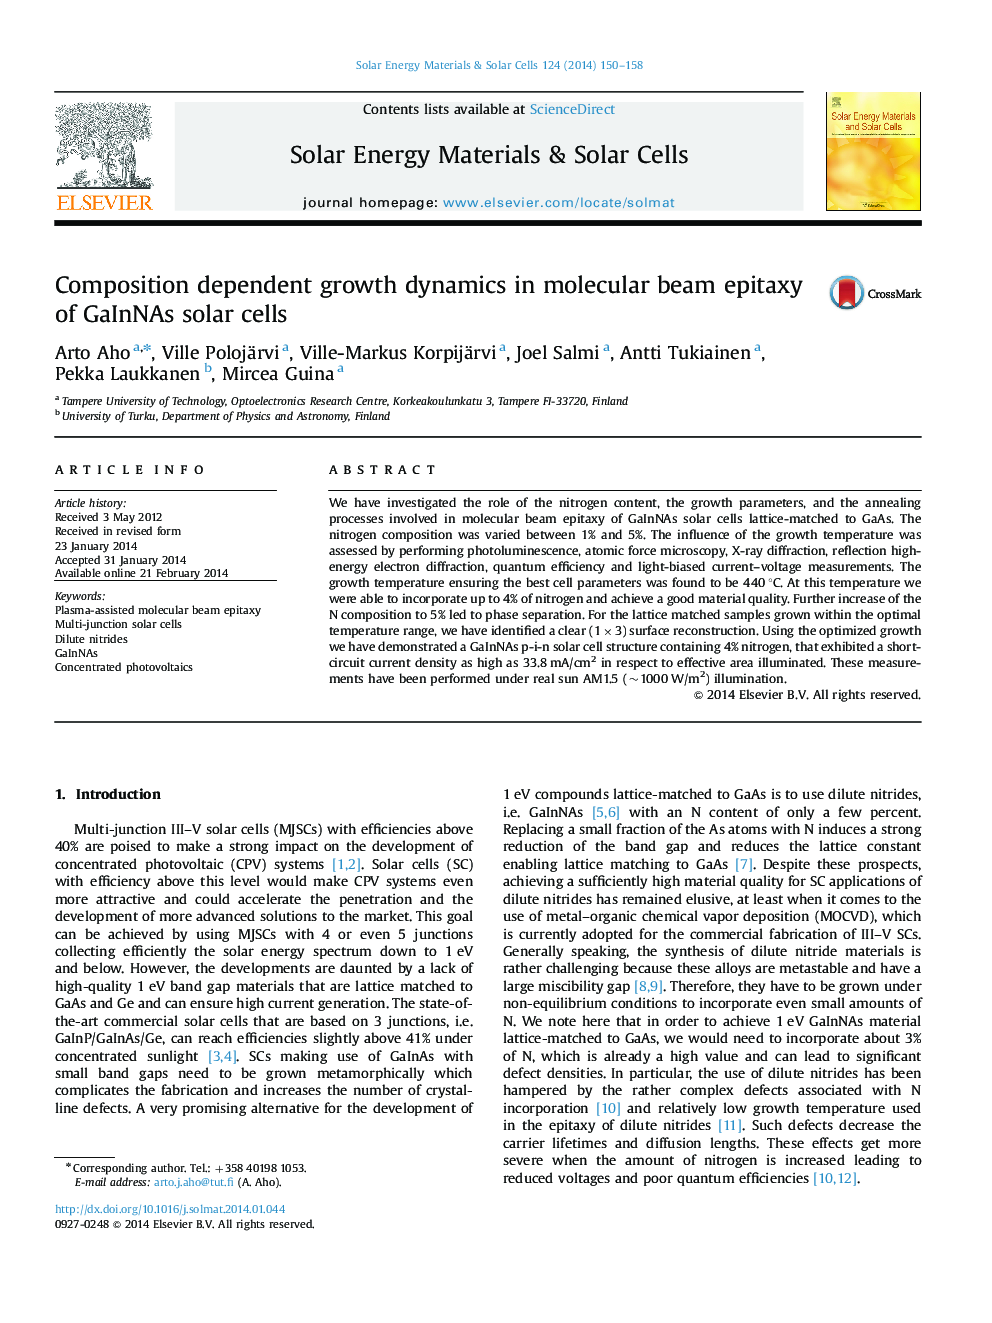 Composition dependent growth dynamics in molecular beam epitaxy of GaInNAs solar cells